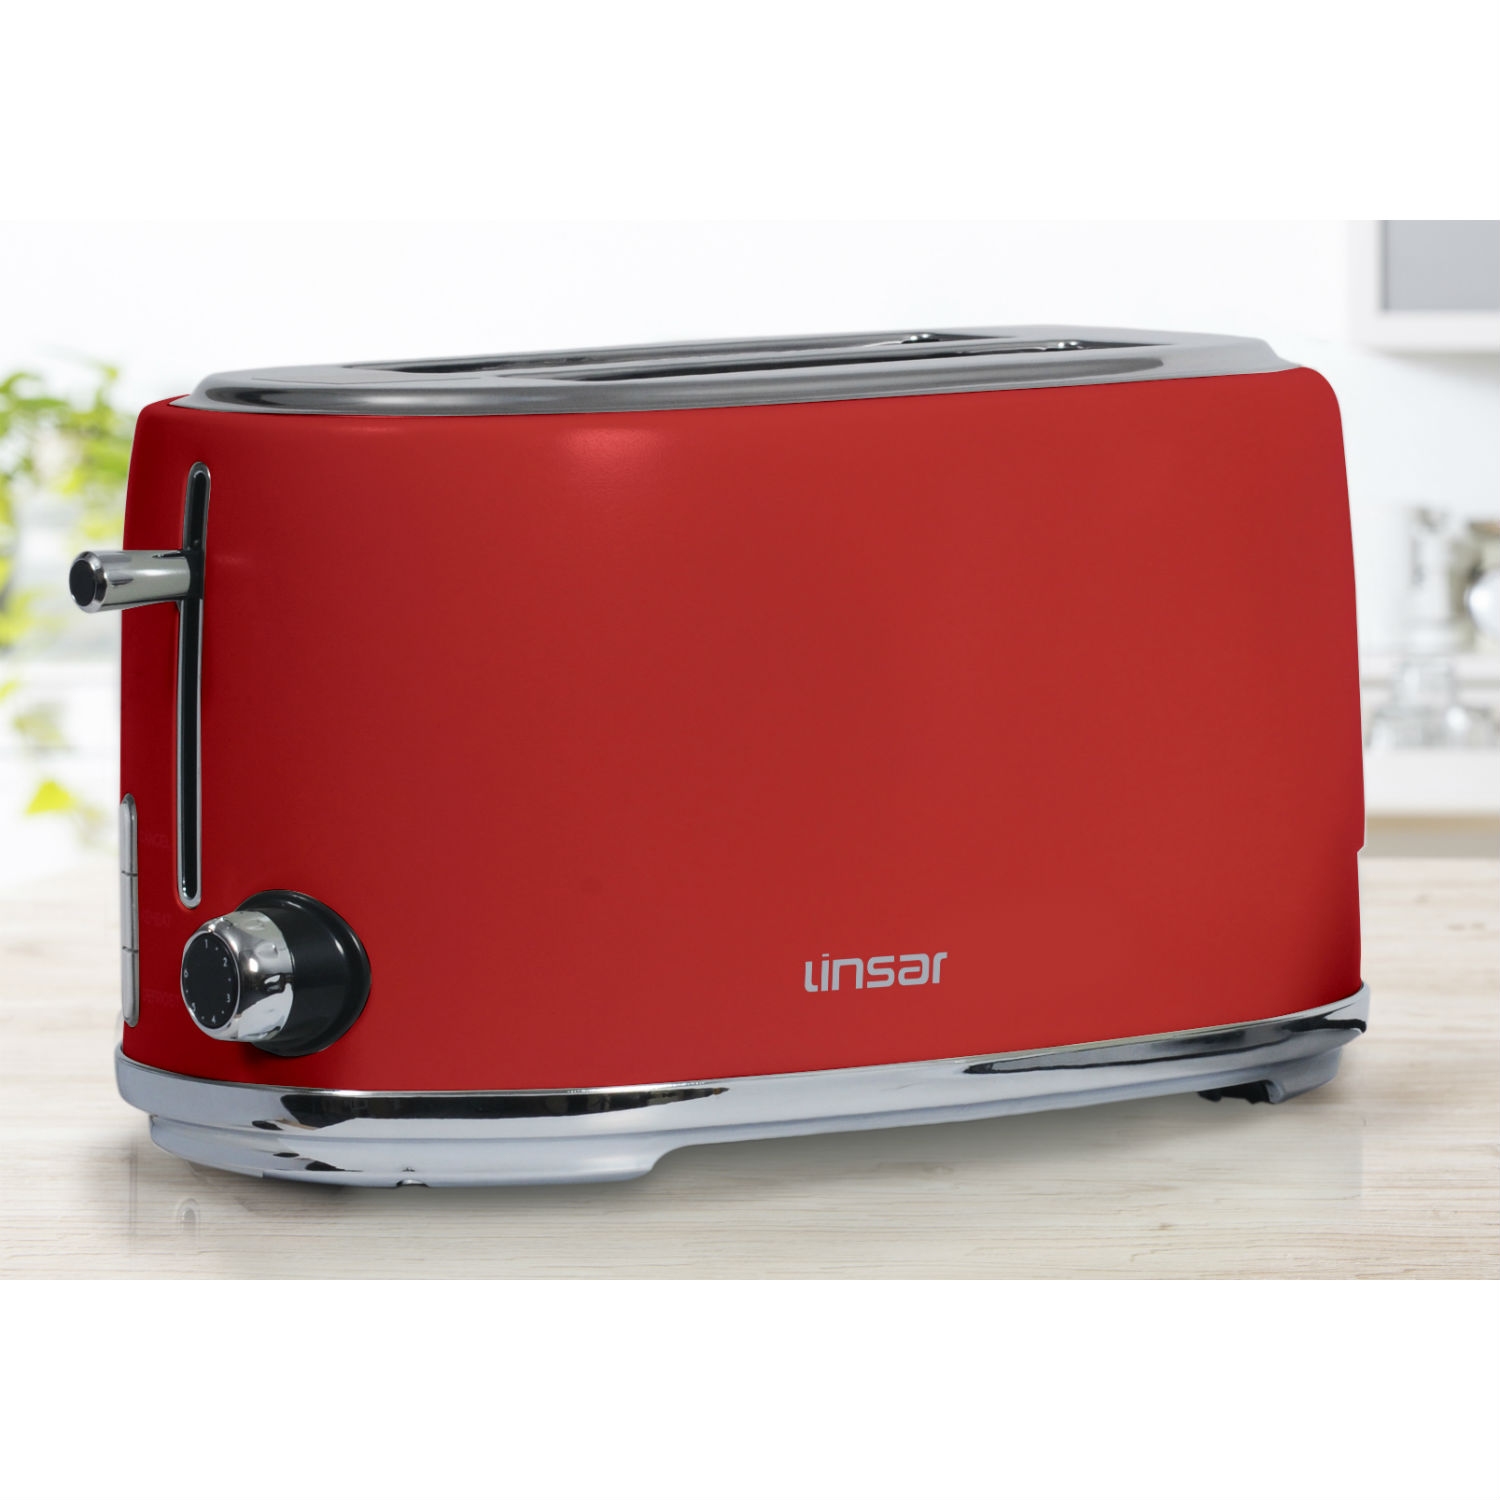 Linsar 4 Slice Toaster - Red - 0